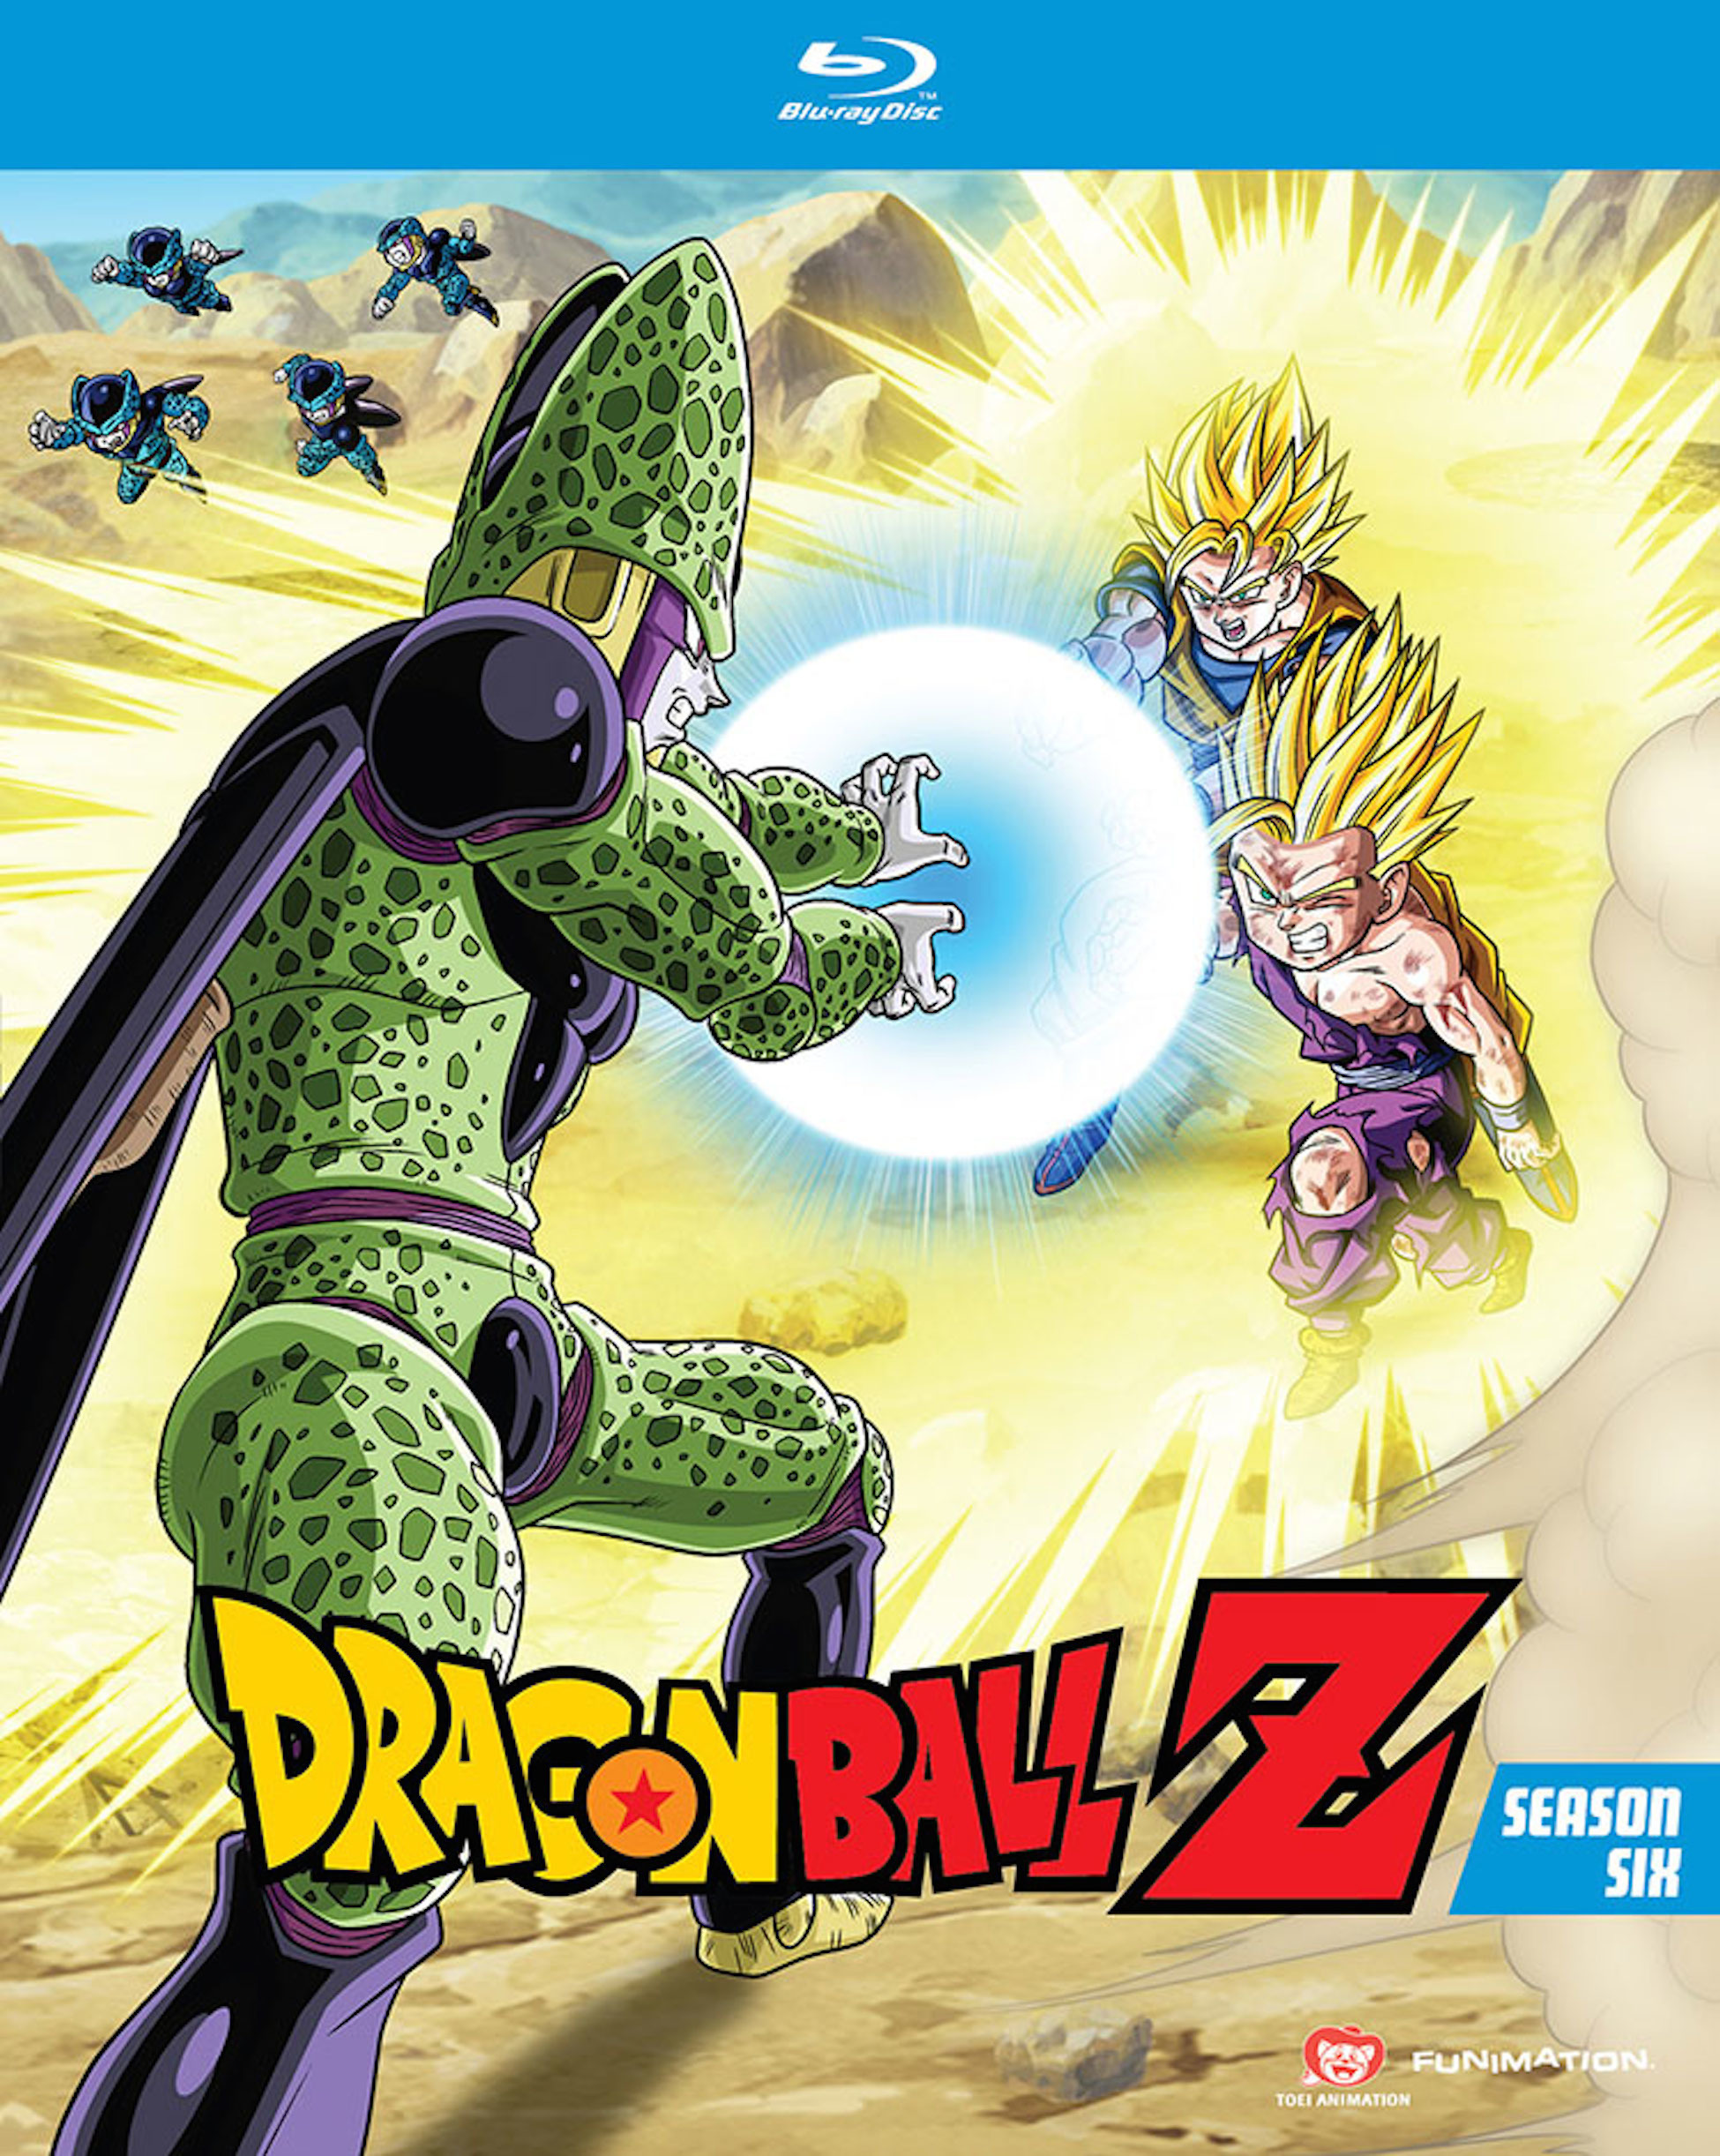 Buy BluRay - Dragon Ball Z Season 05 Android Saga Blu-ray 